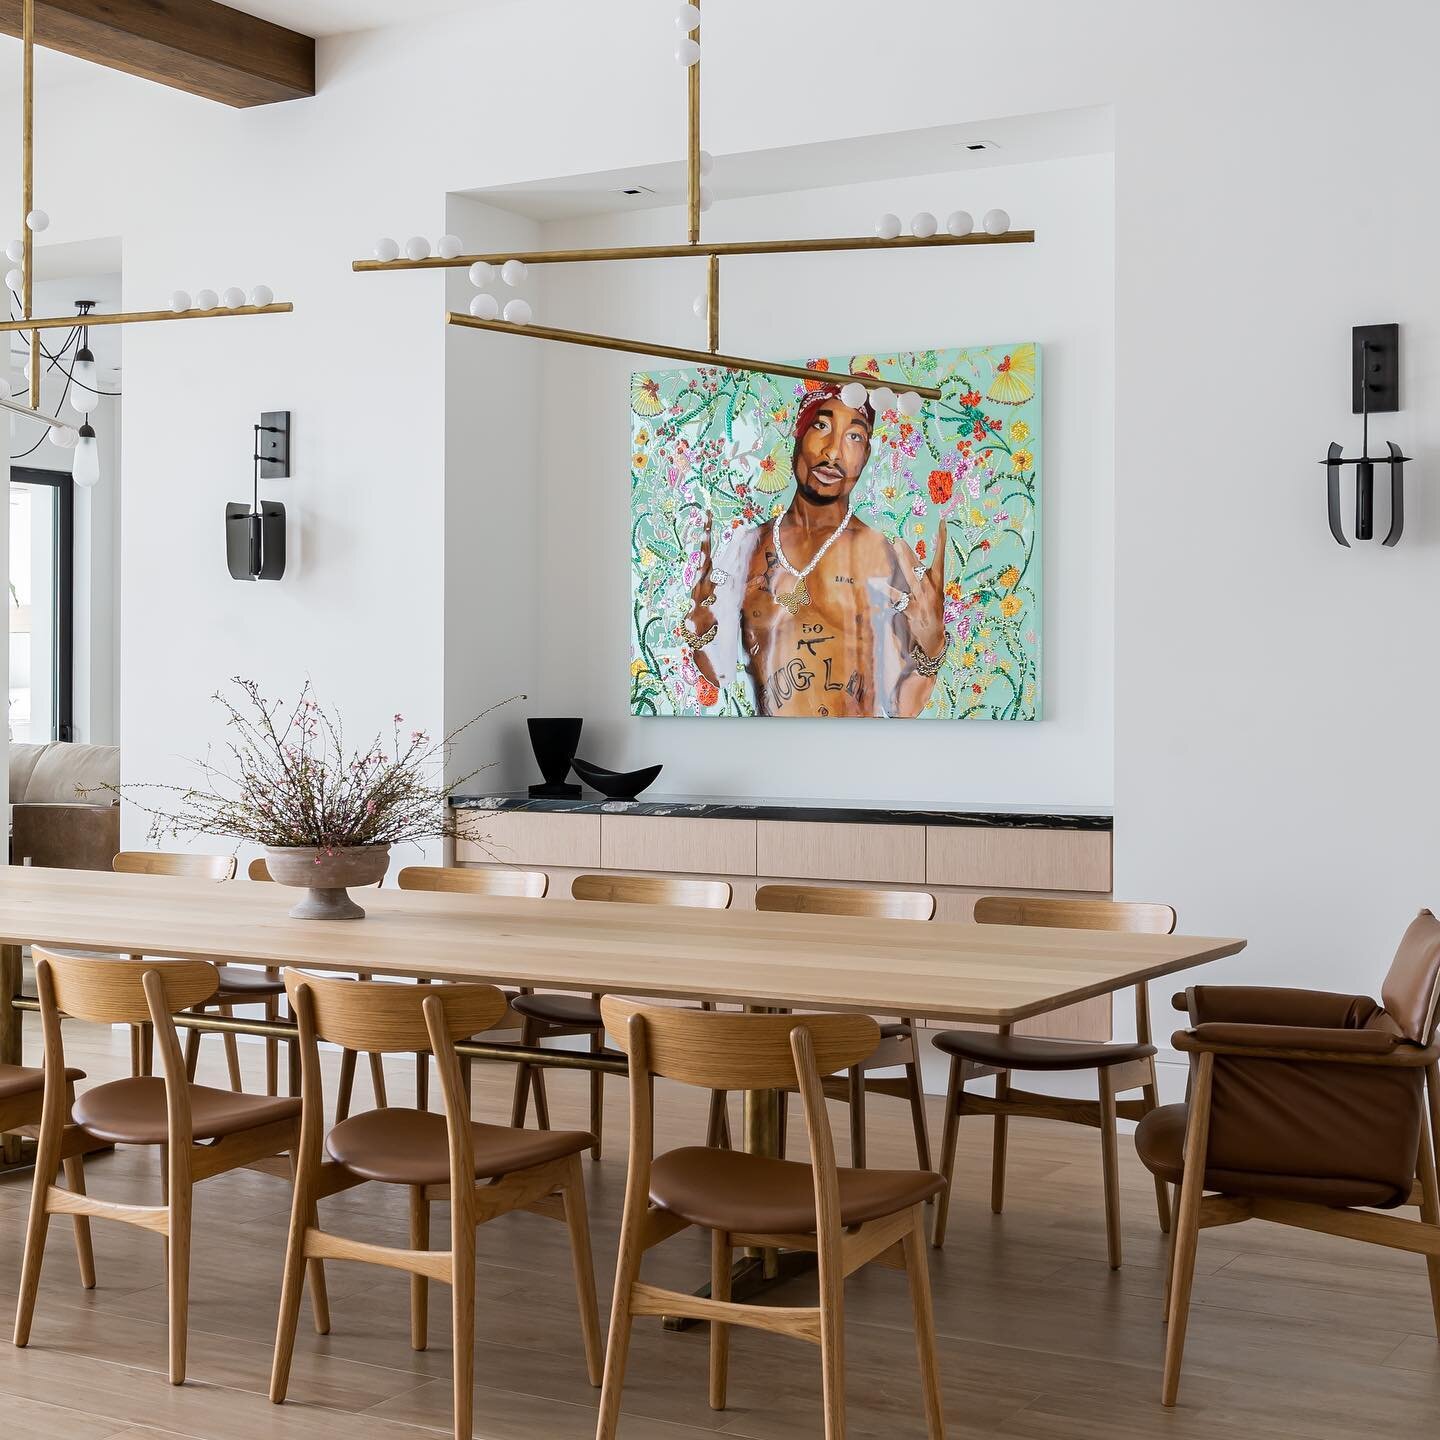 all the dinner parties 🍷

Design @erinacantuinteriors 
 📸 @venjhaminreyesphotography 
Styling @hilow.art @shop.la.seed 

#diningroom #dining #diningtable #customfurniture #art #contemporarydesign #interiordesign #interiors #custombuild #customhomes